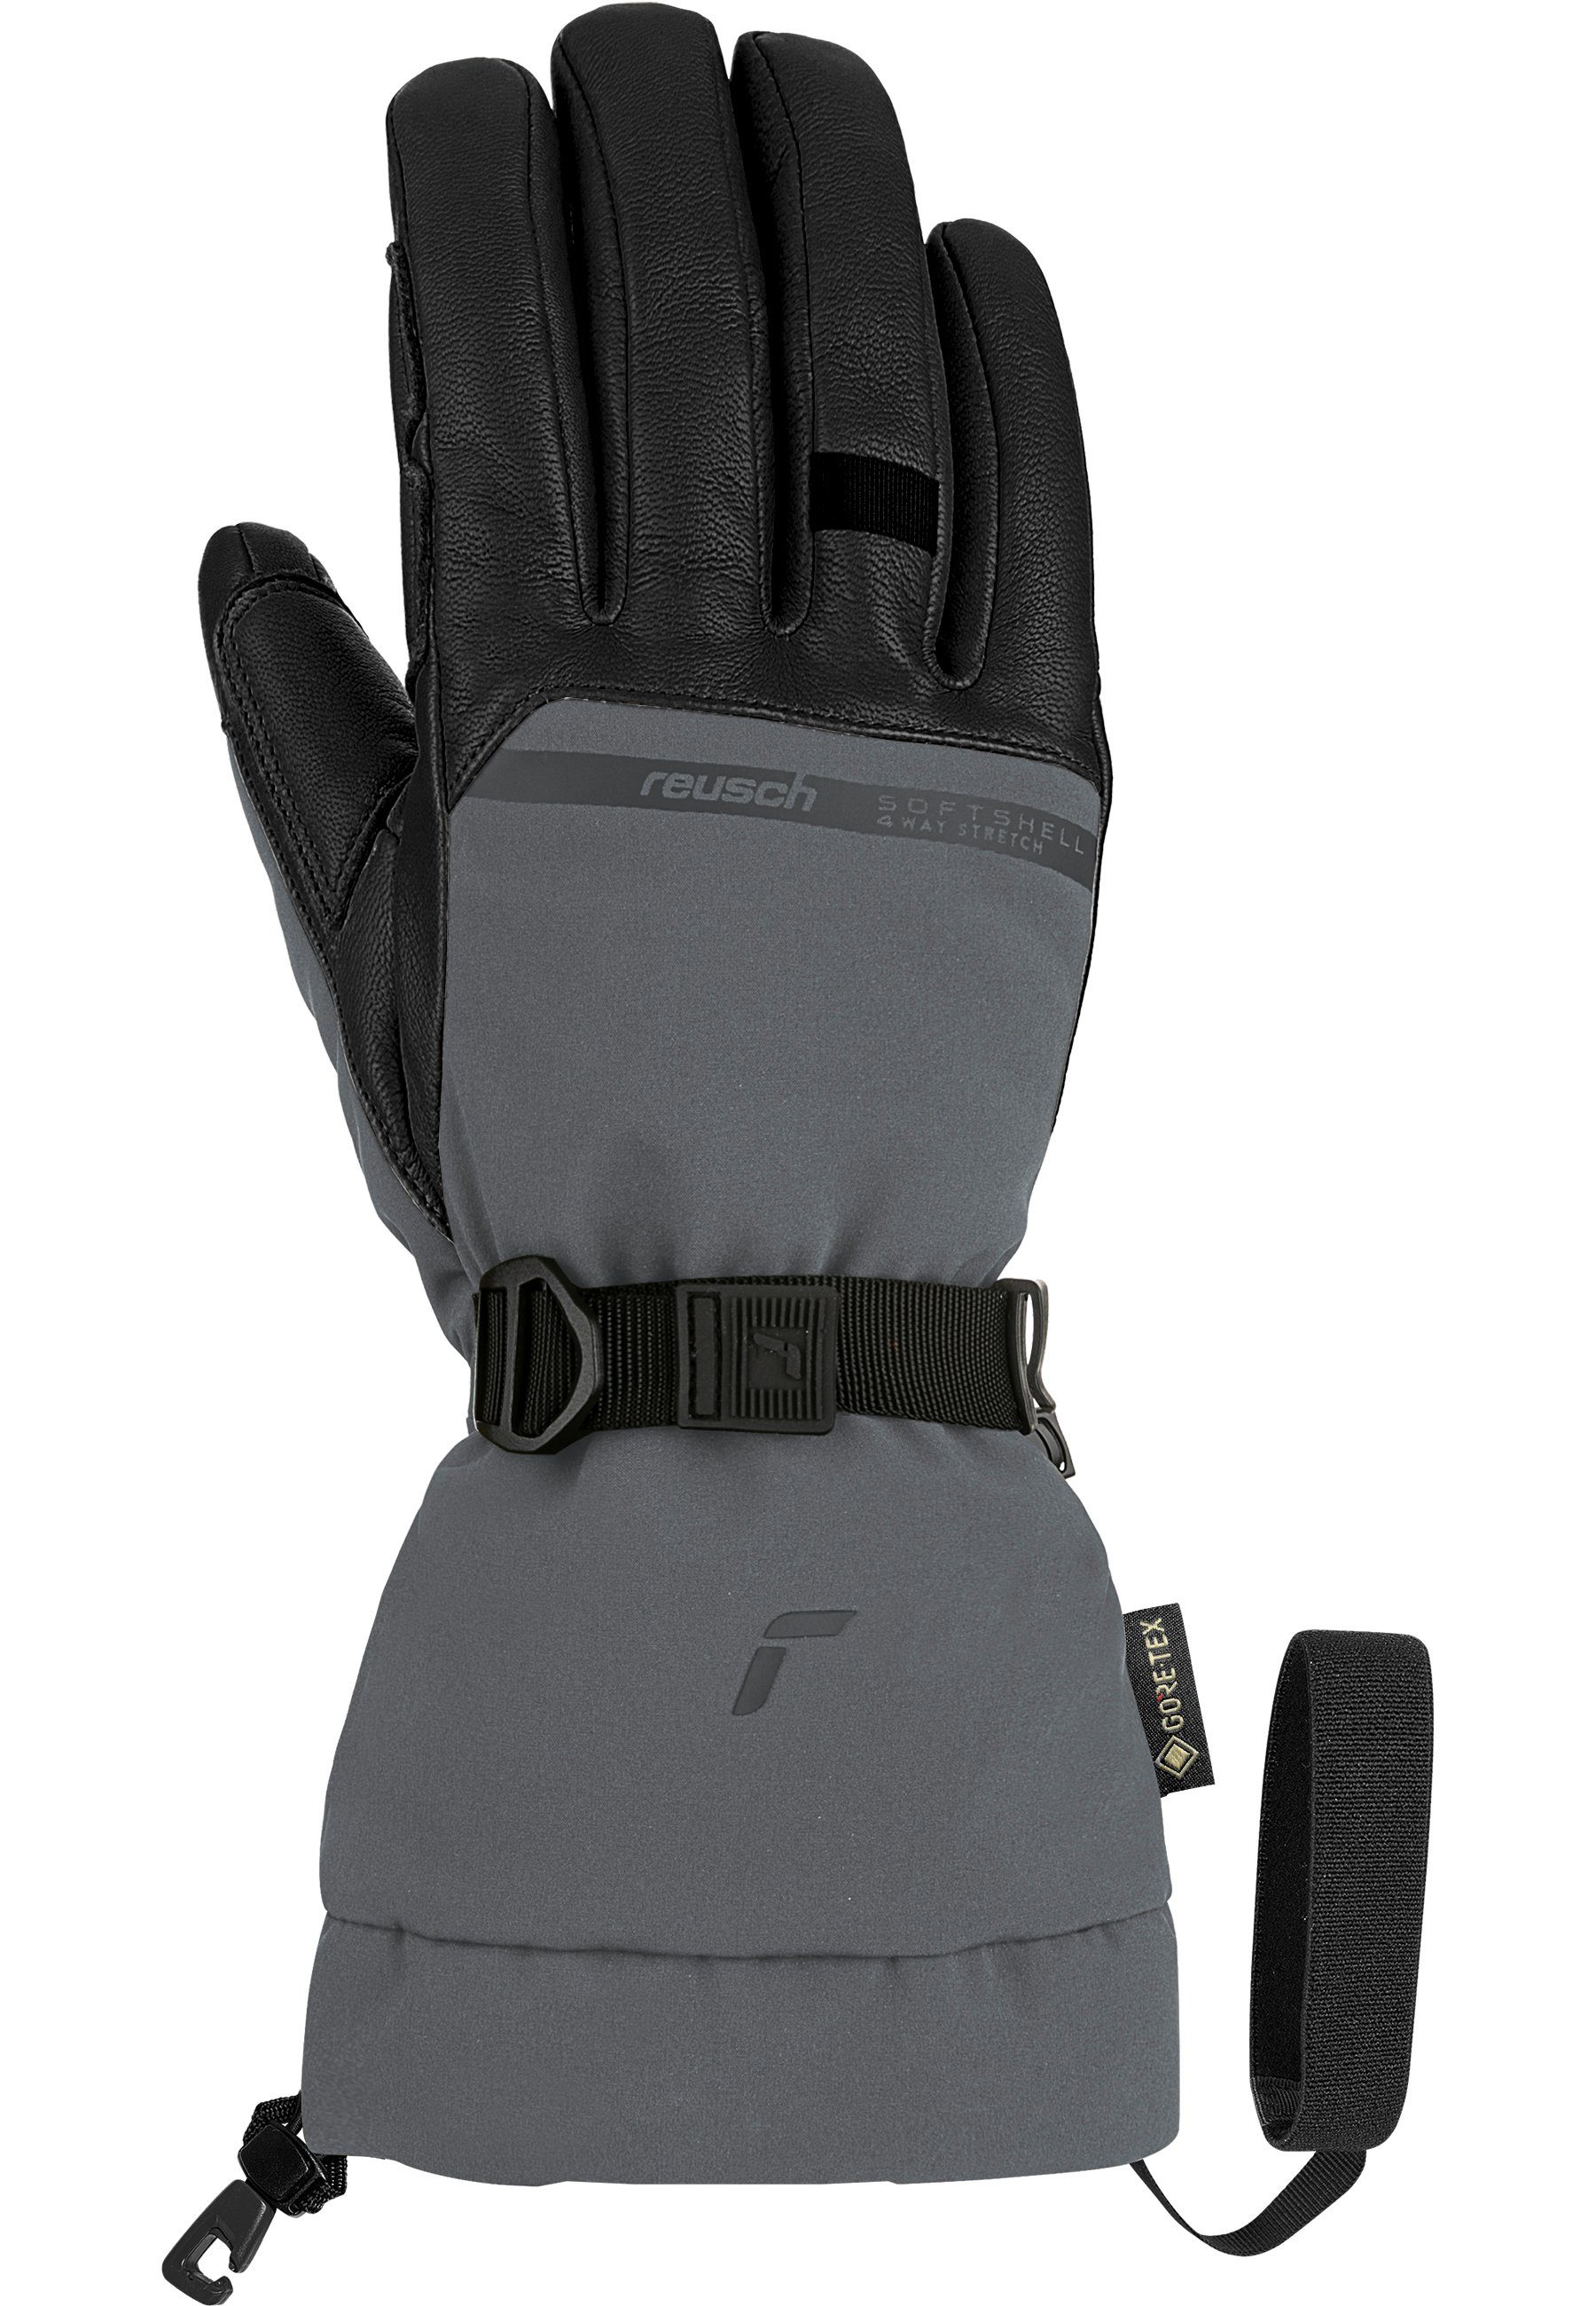 Discovery GORE-TEX Reusch wasserdicht TOUCH-TEC™ grau-schwarz warm, Skihandschuhe sehr